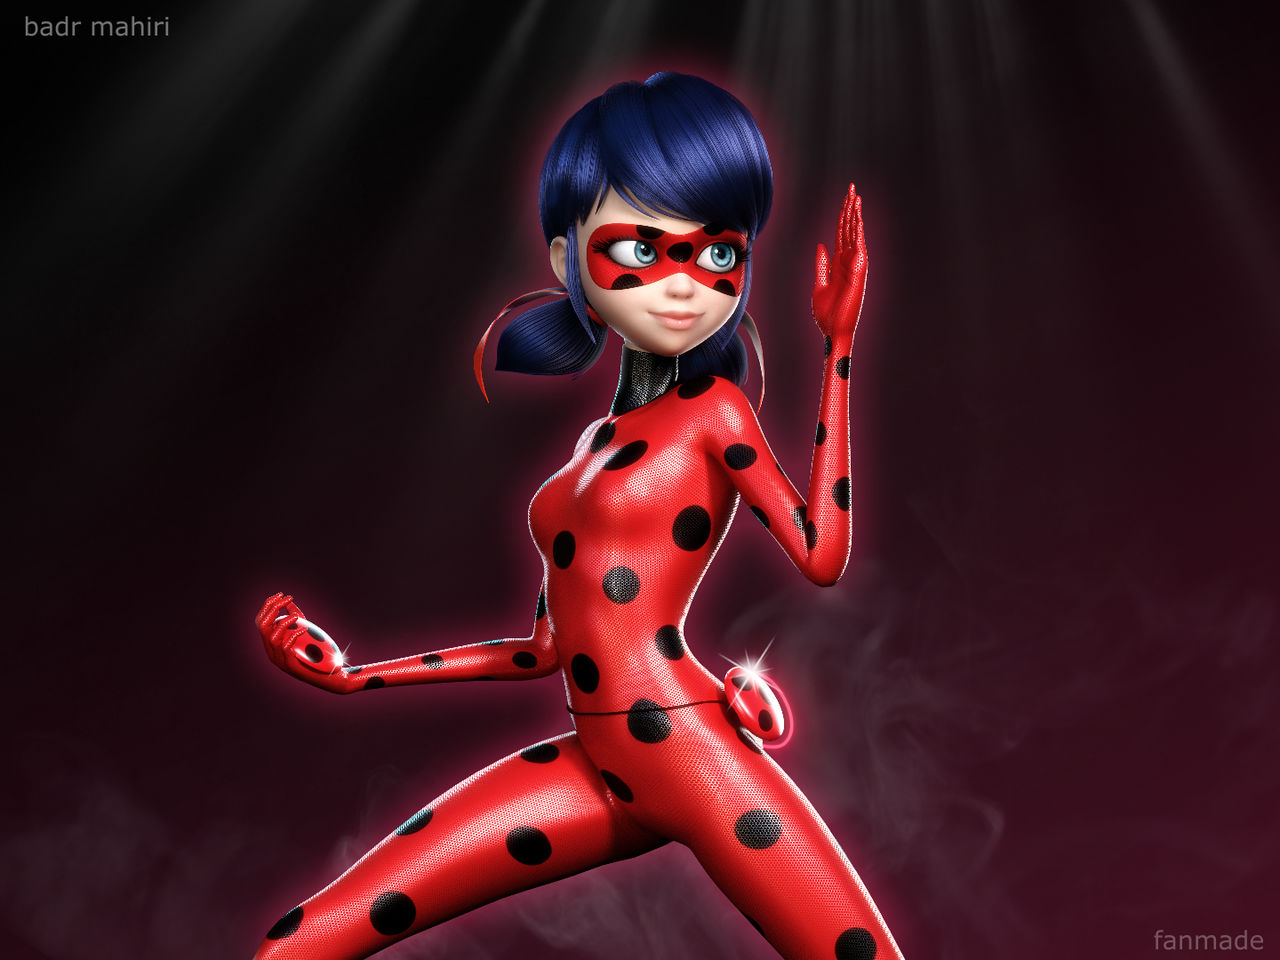 Ladybug by MiraculousRender on DeviantArt